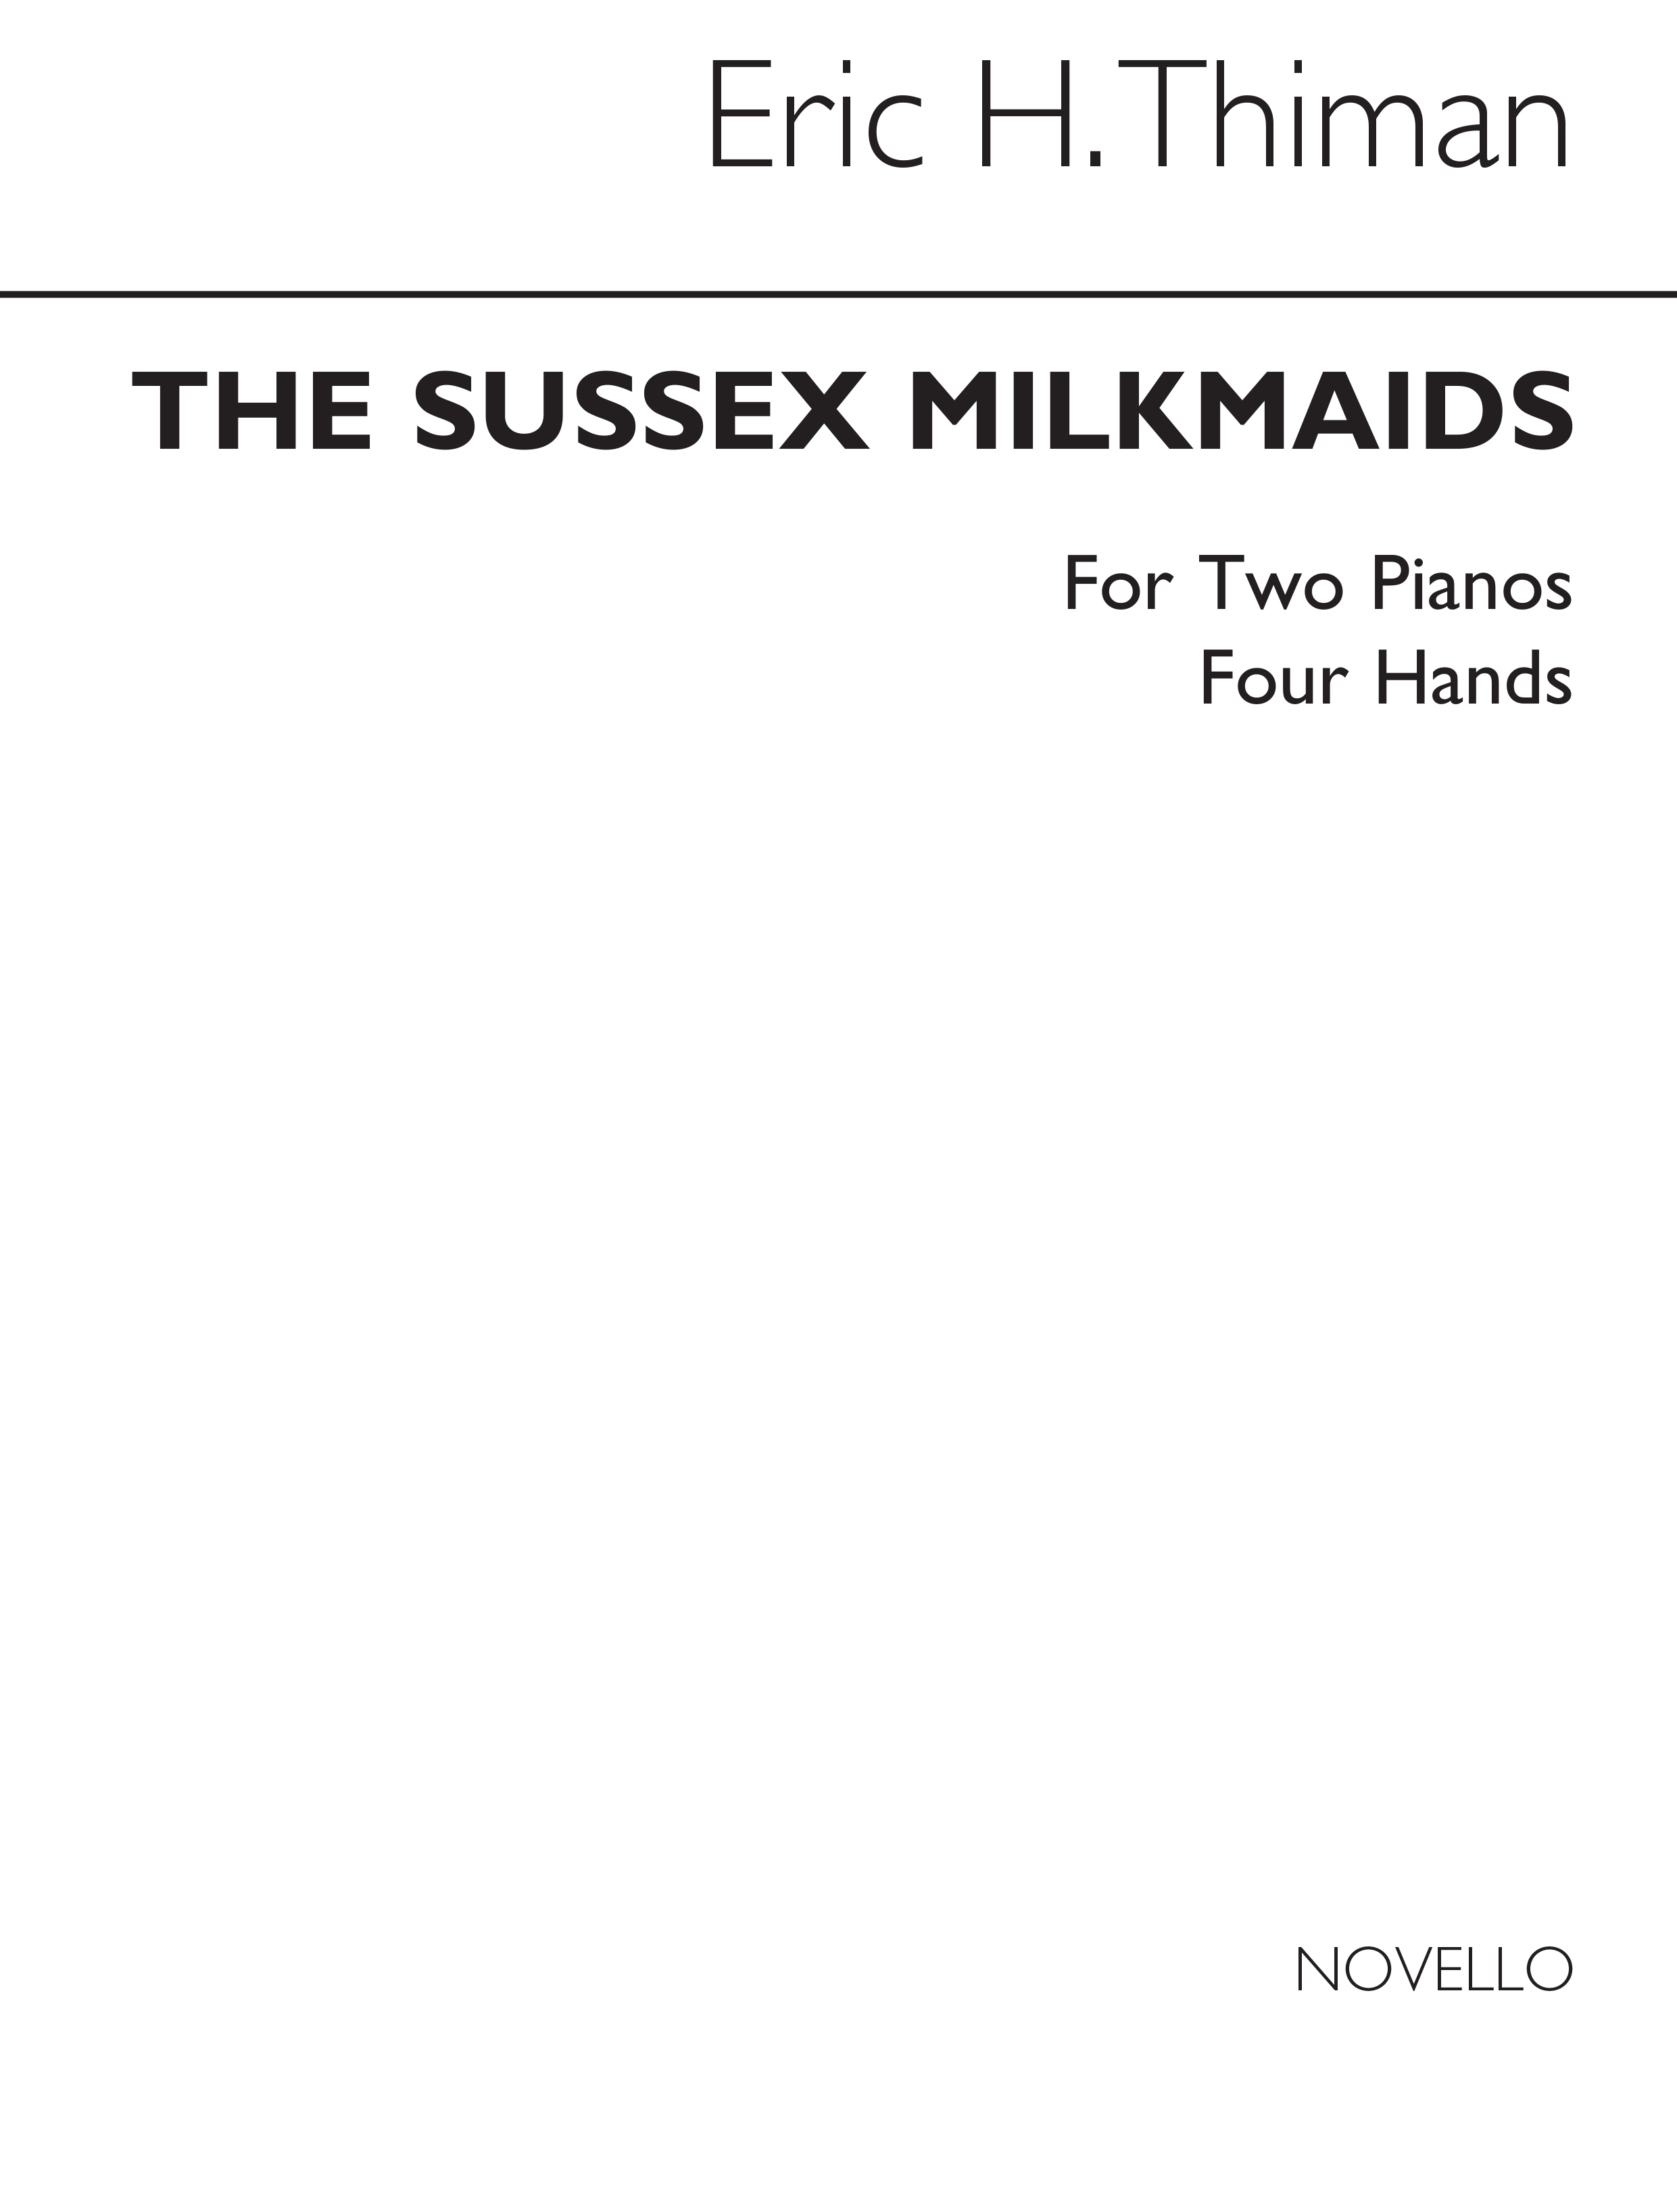 Eric Thiman: Sussex Milkmaids 2pfs/4hands